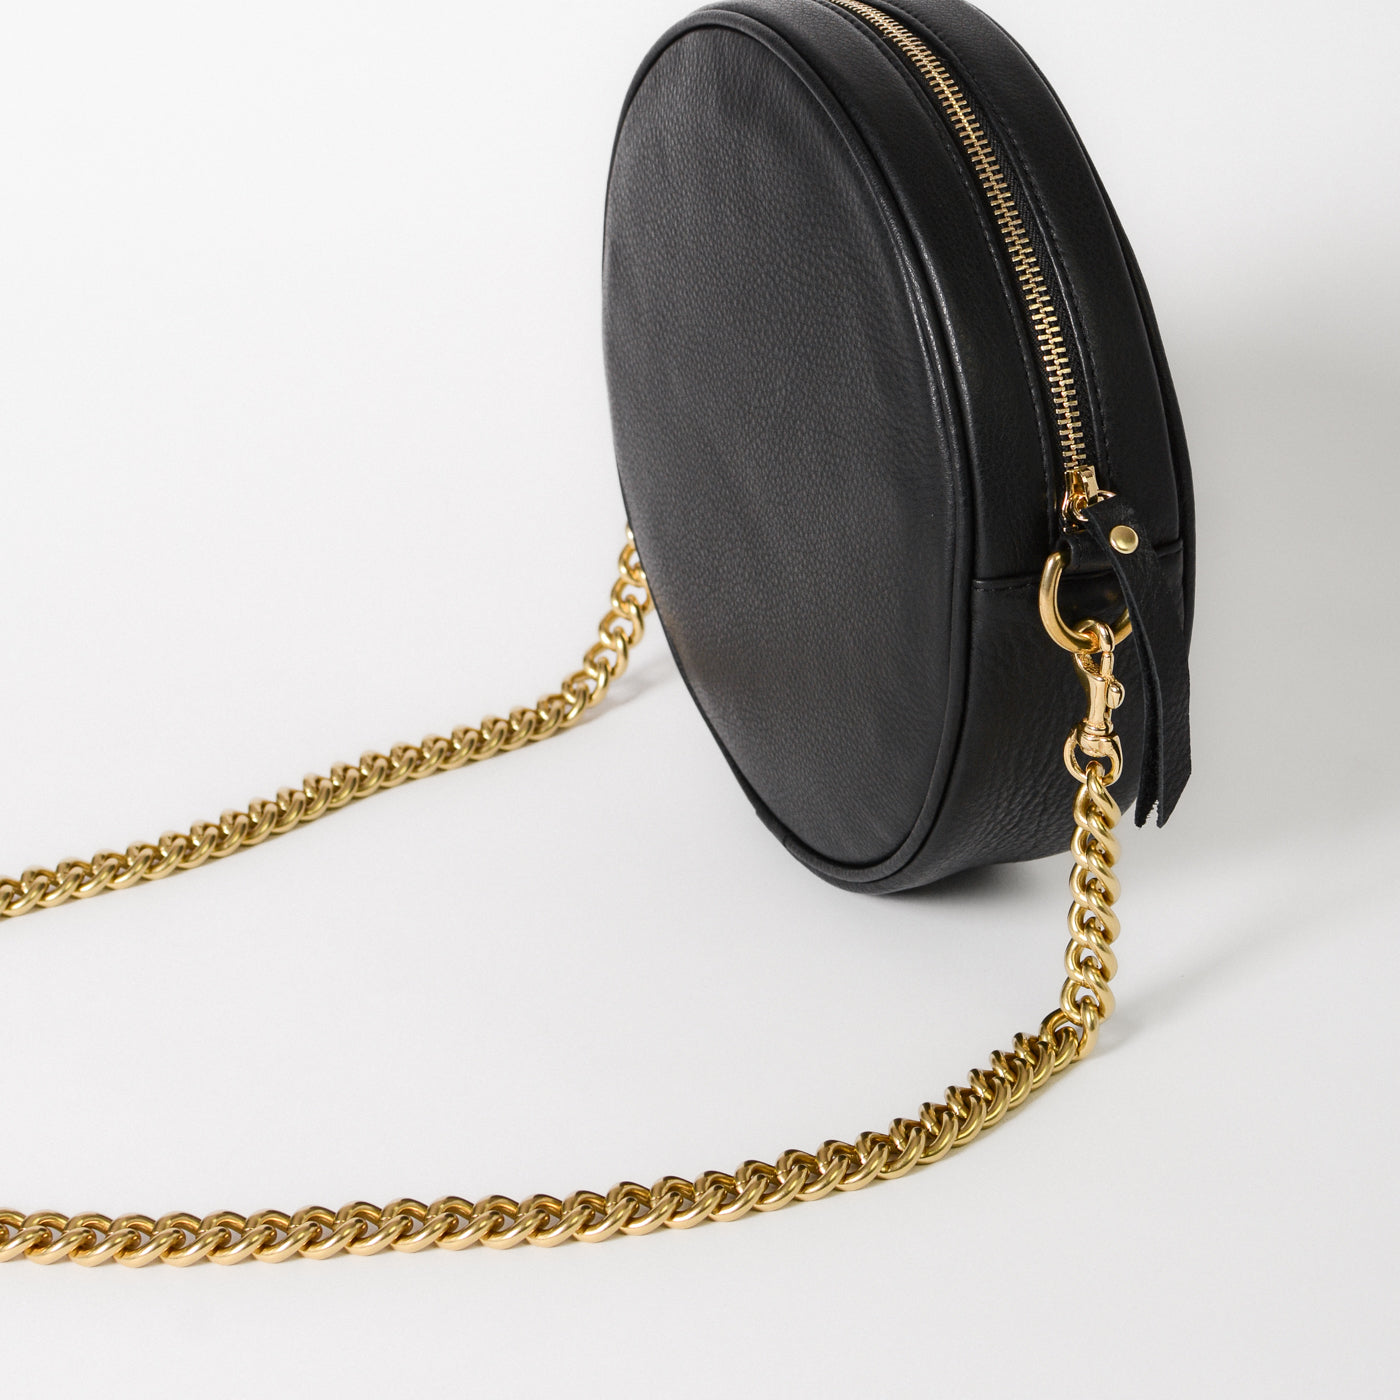 John Richmond designer smooth black leather crossbody bag chain strap purse  | eBay